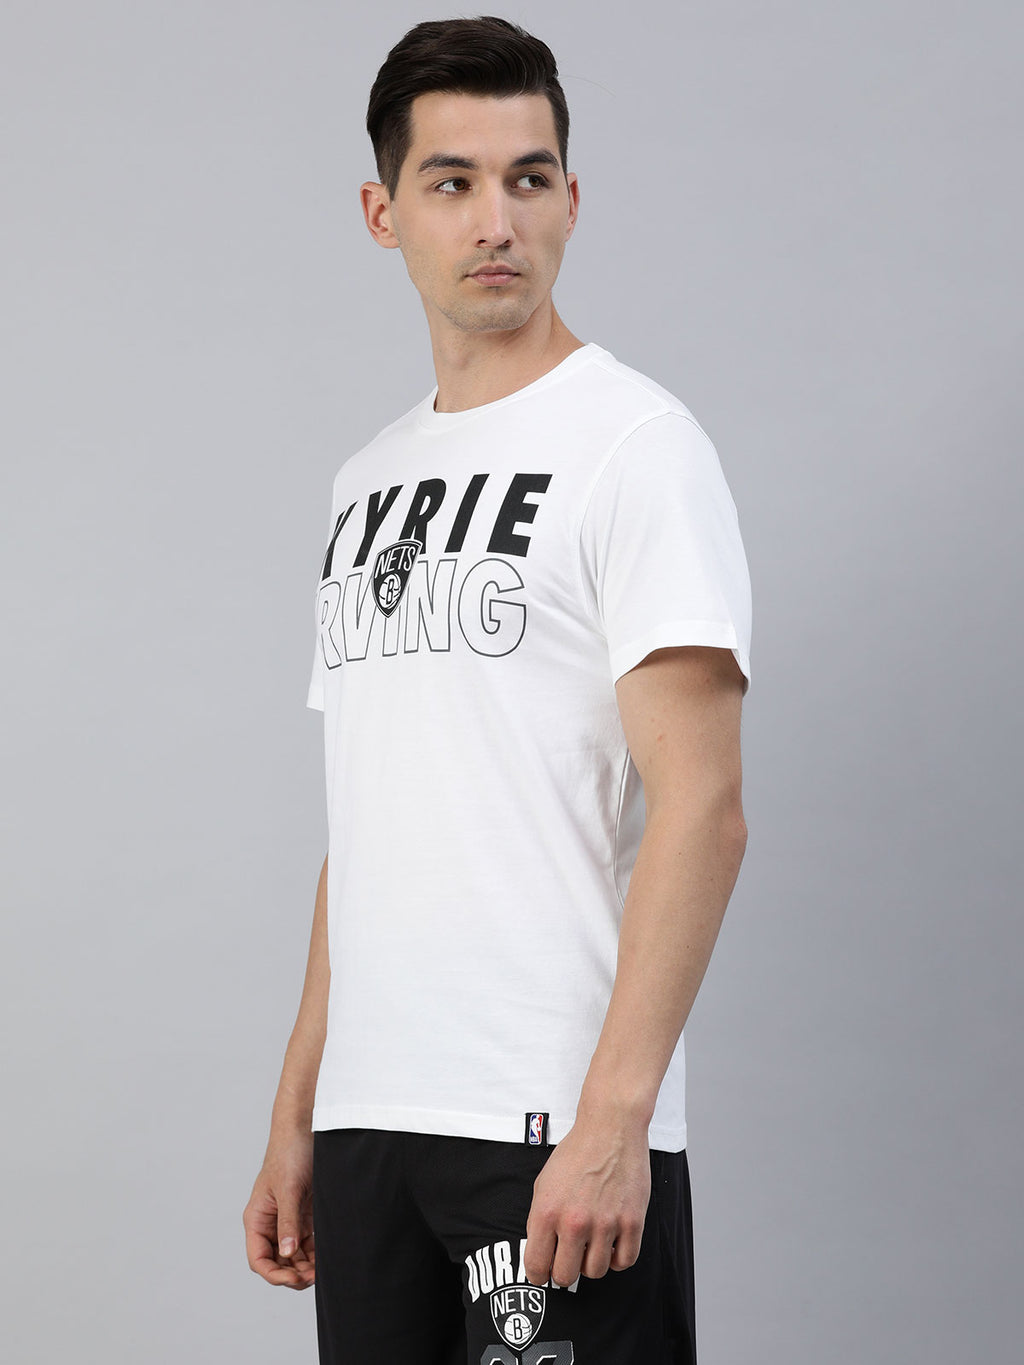 Stand With Kyrie Irving We Want Kyrie Shirt - Kingteeshop